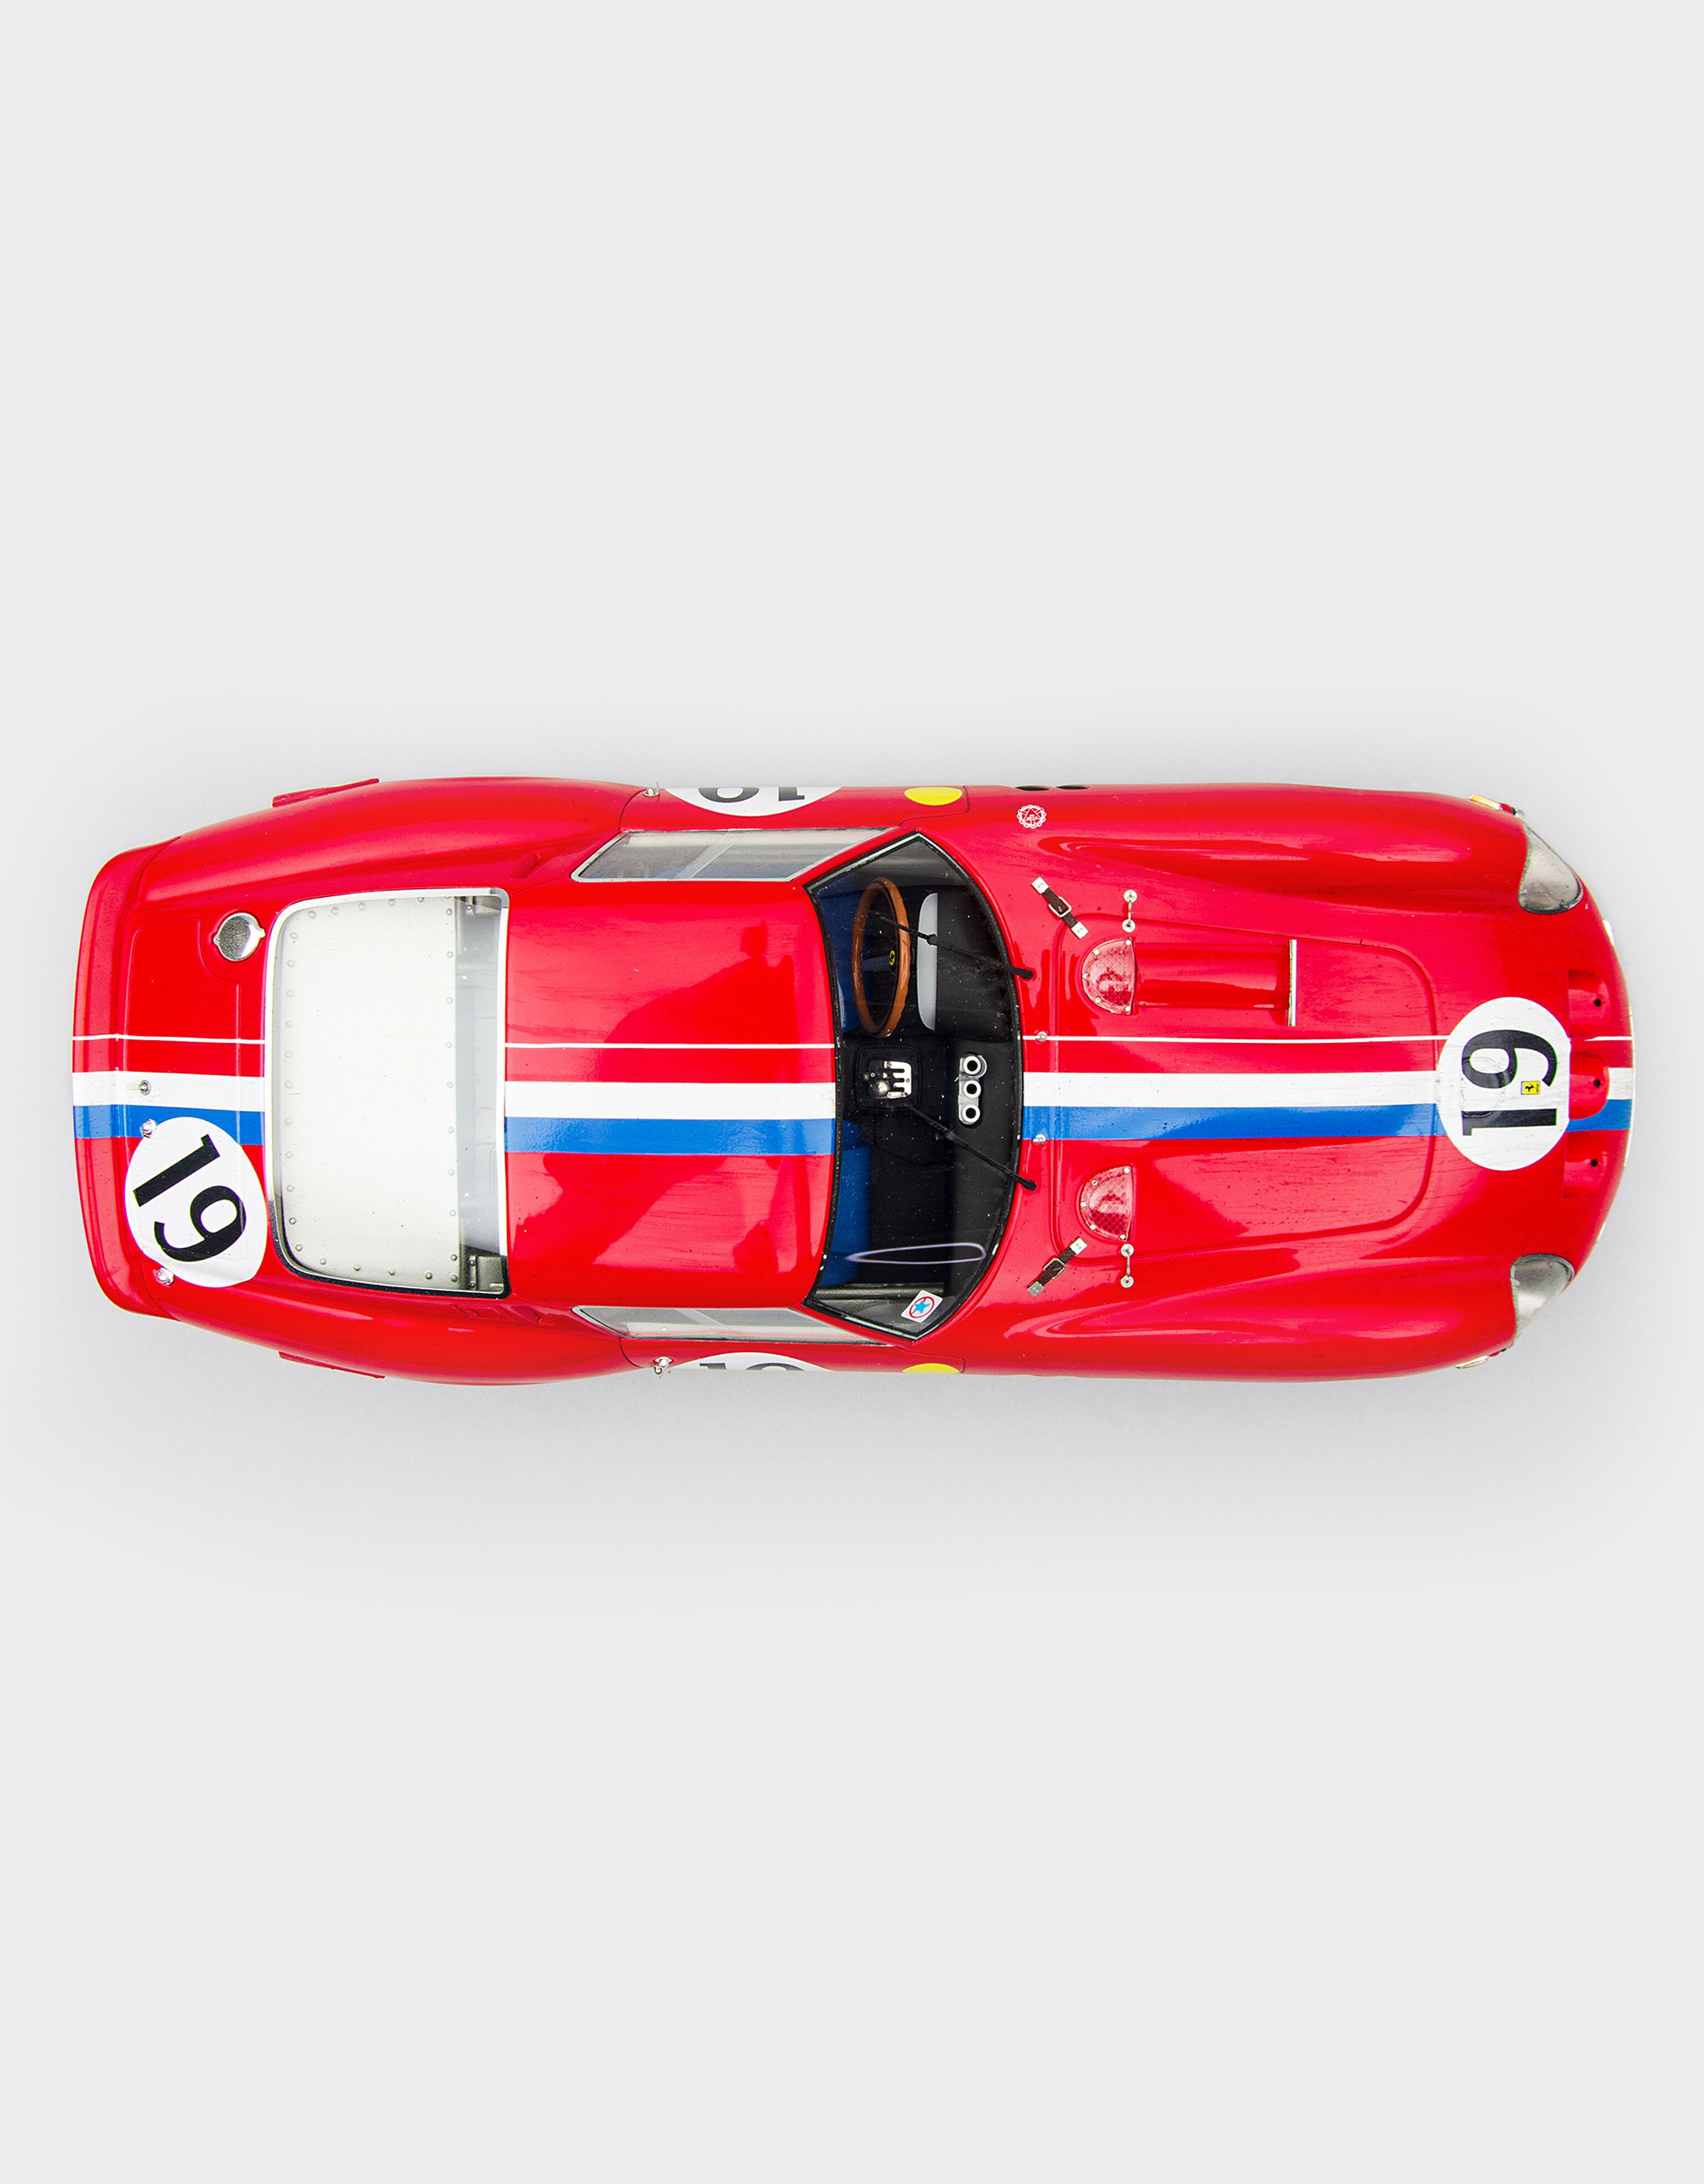 Ferrari Ferrari 250 GTO 1962 “Race weathered” Le Mans モデルカー 1:18スケール Rosso Corsa F0893f